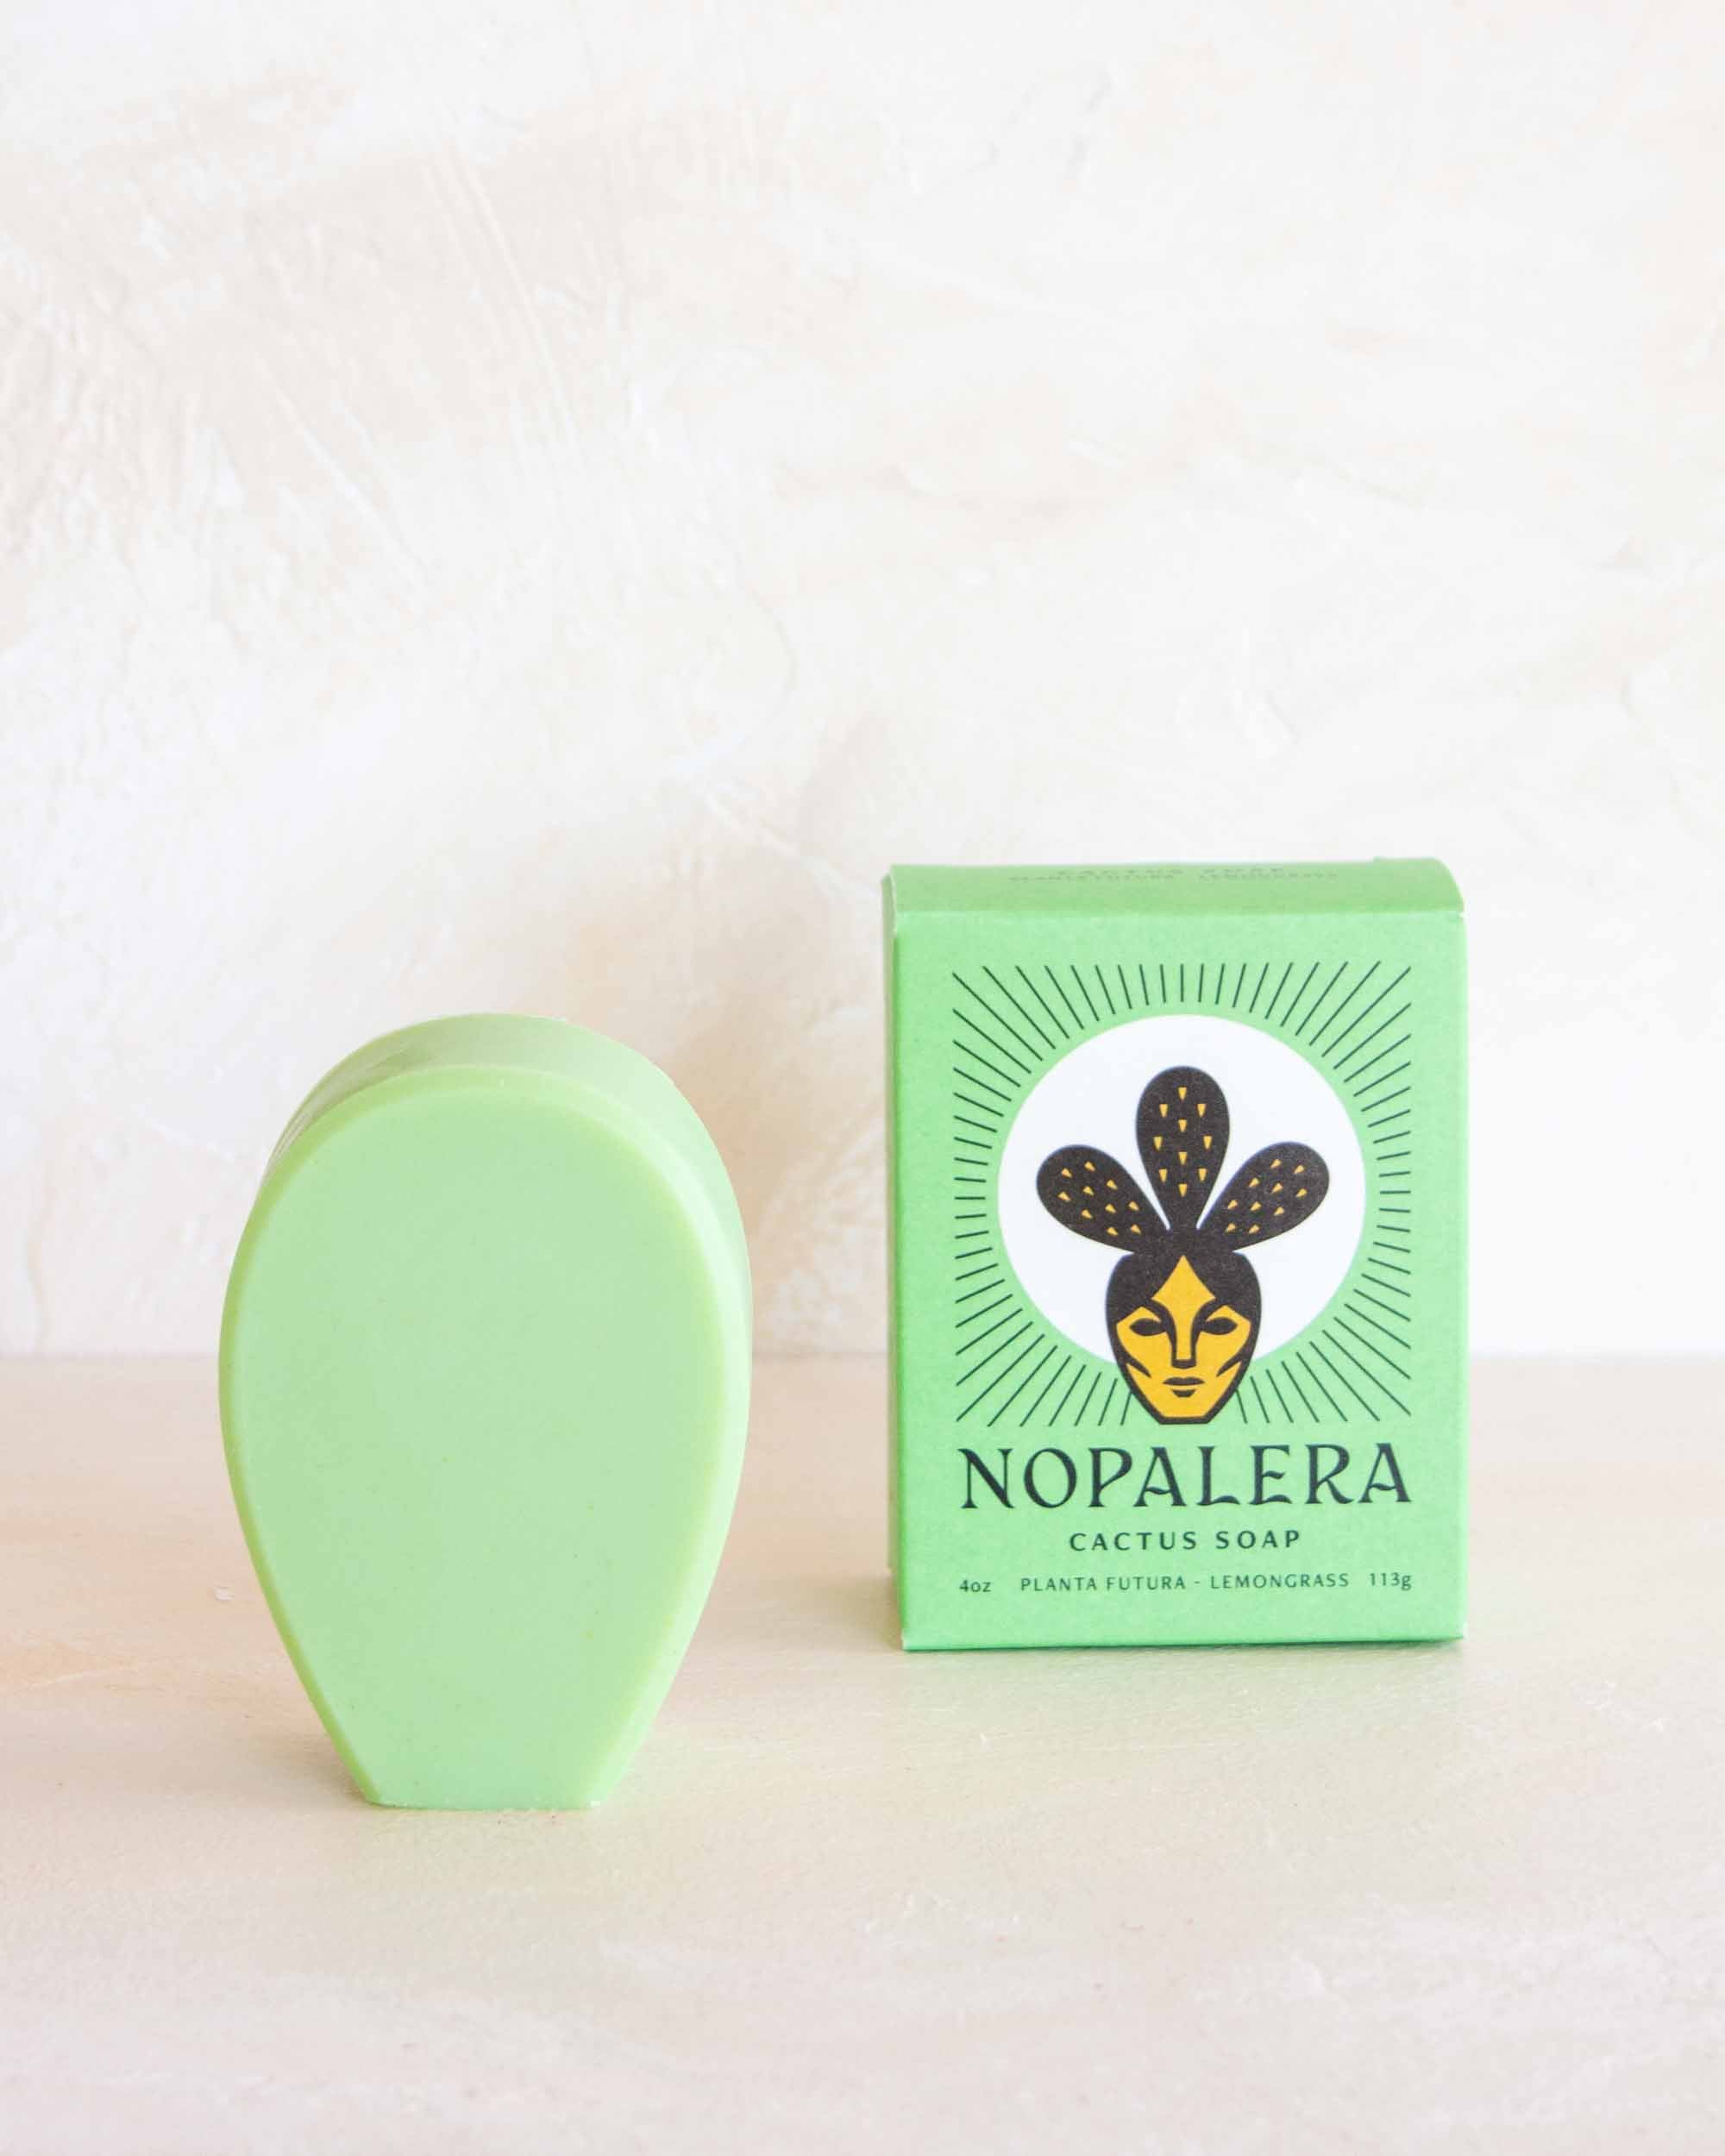 Nopalera Cactus Soap - Planta Futura